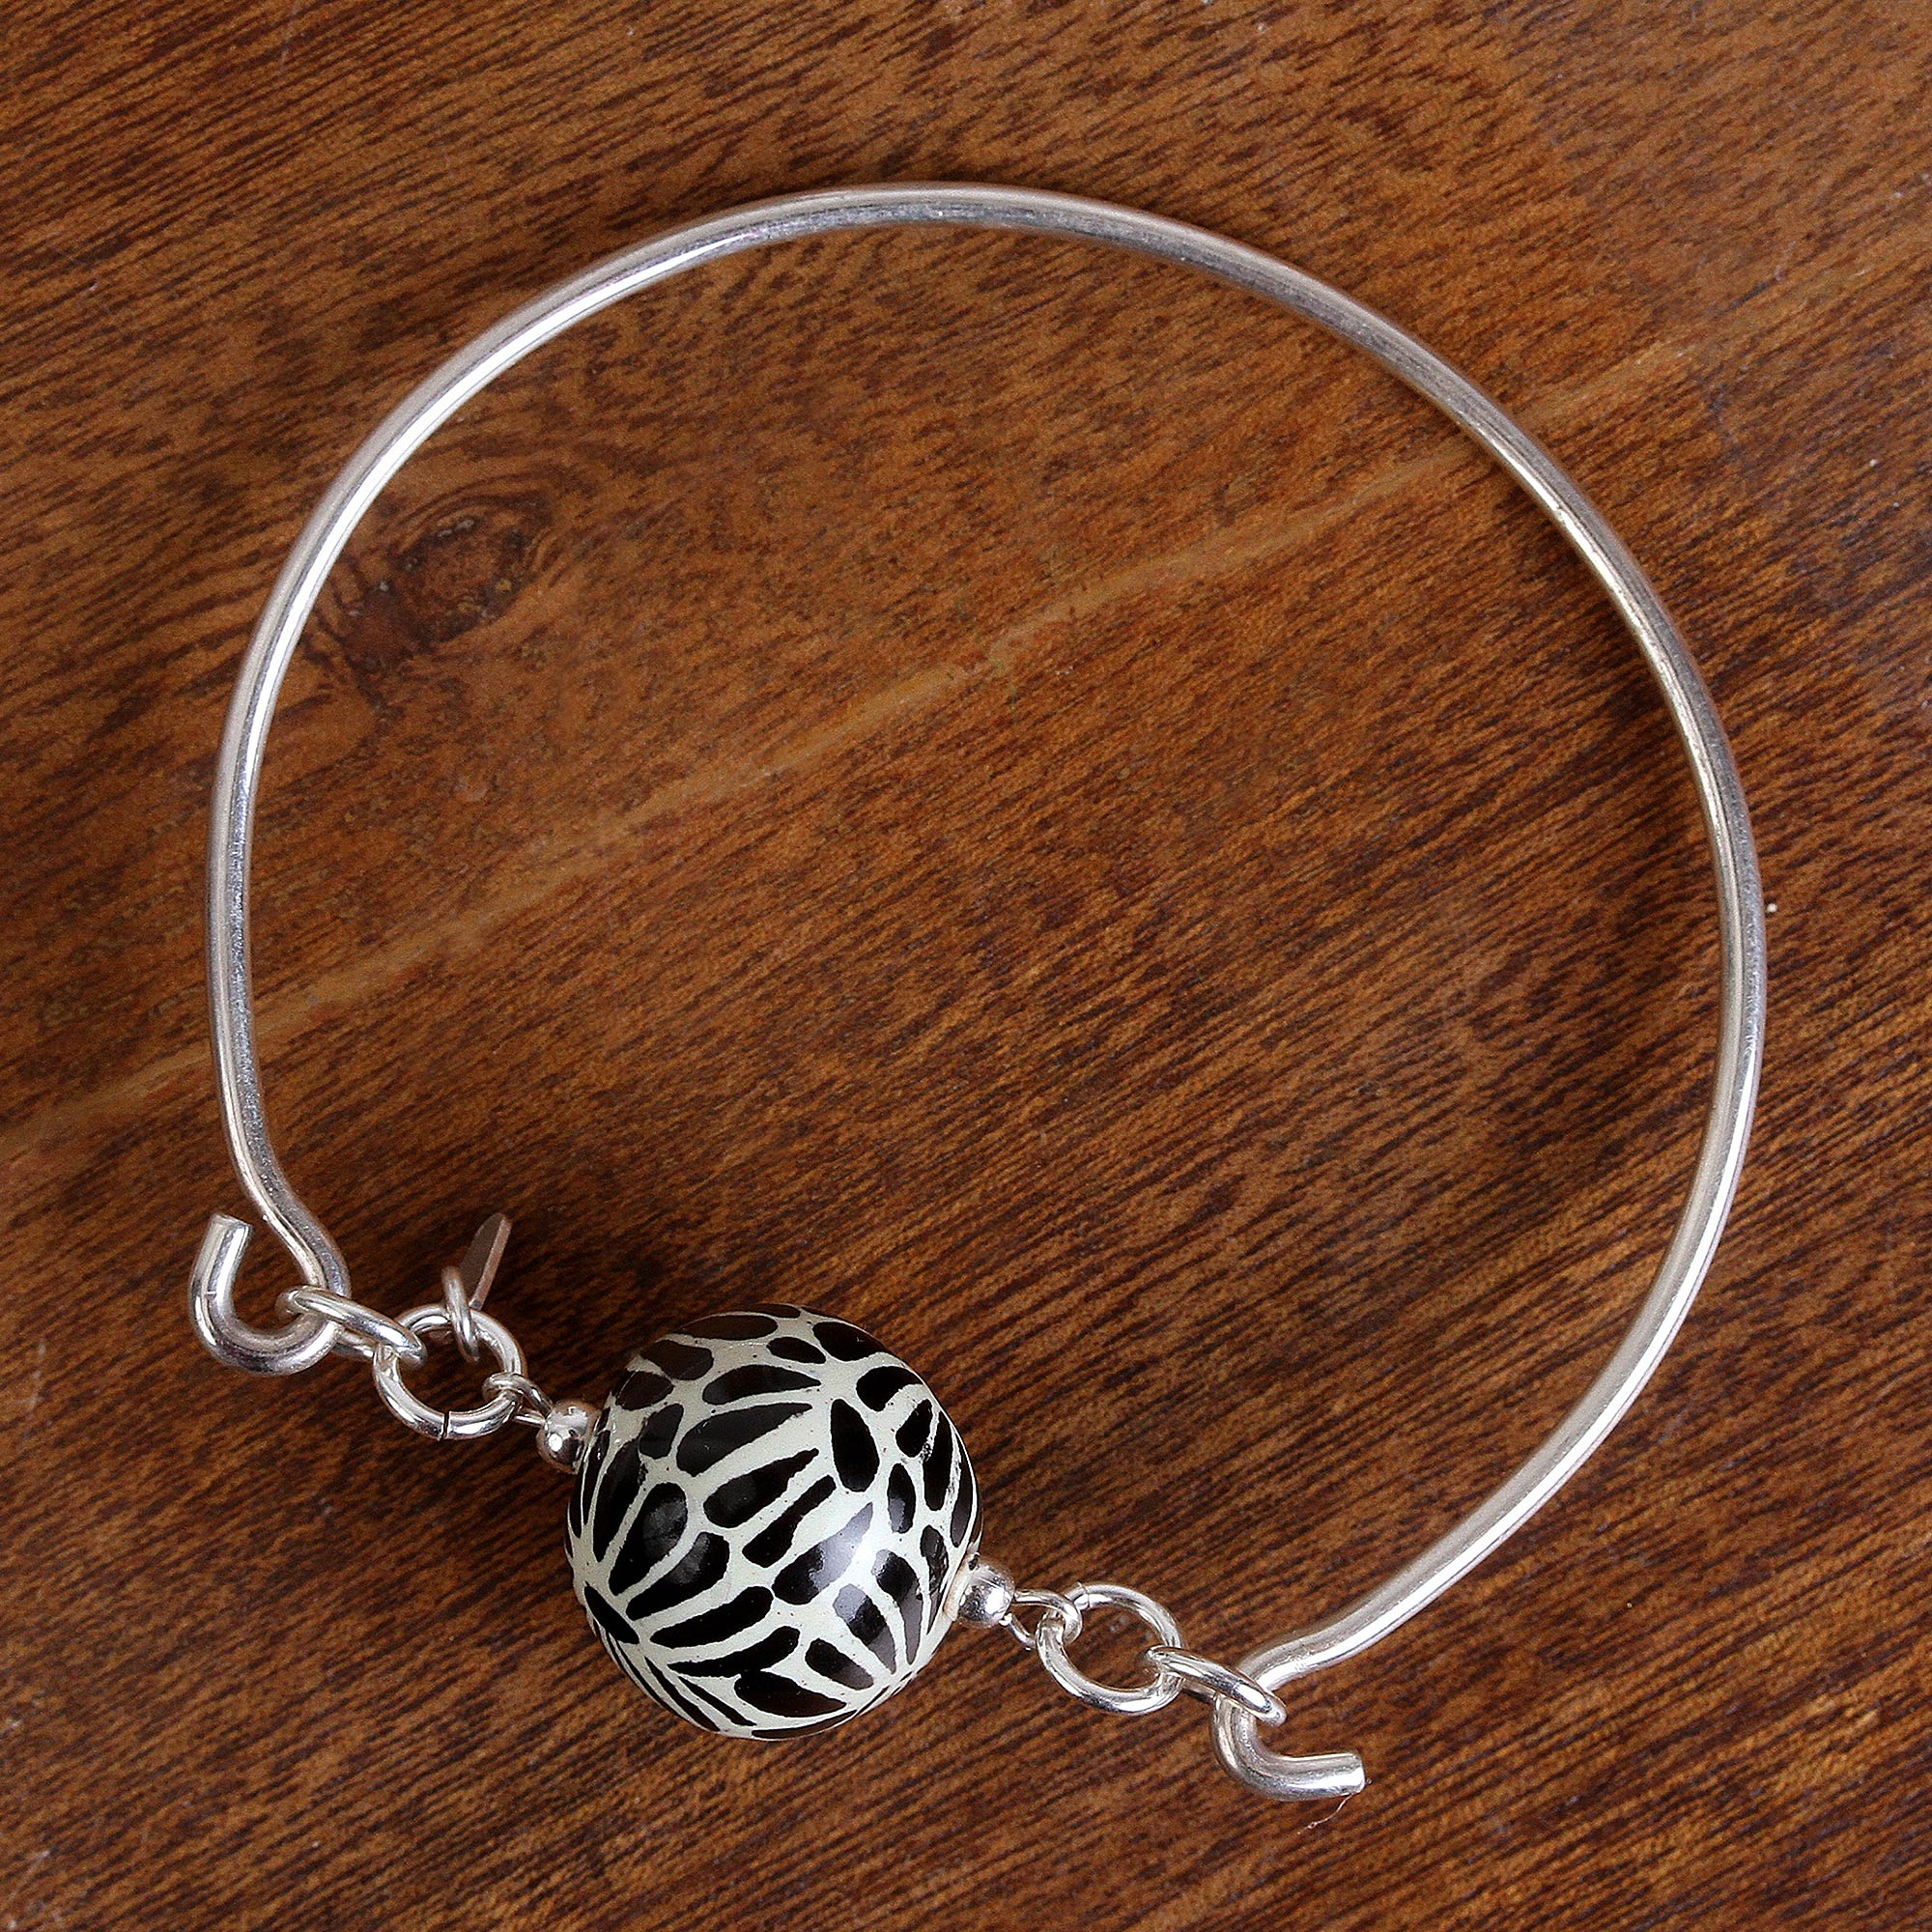 Ceramic piece bracelet with silver charms